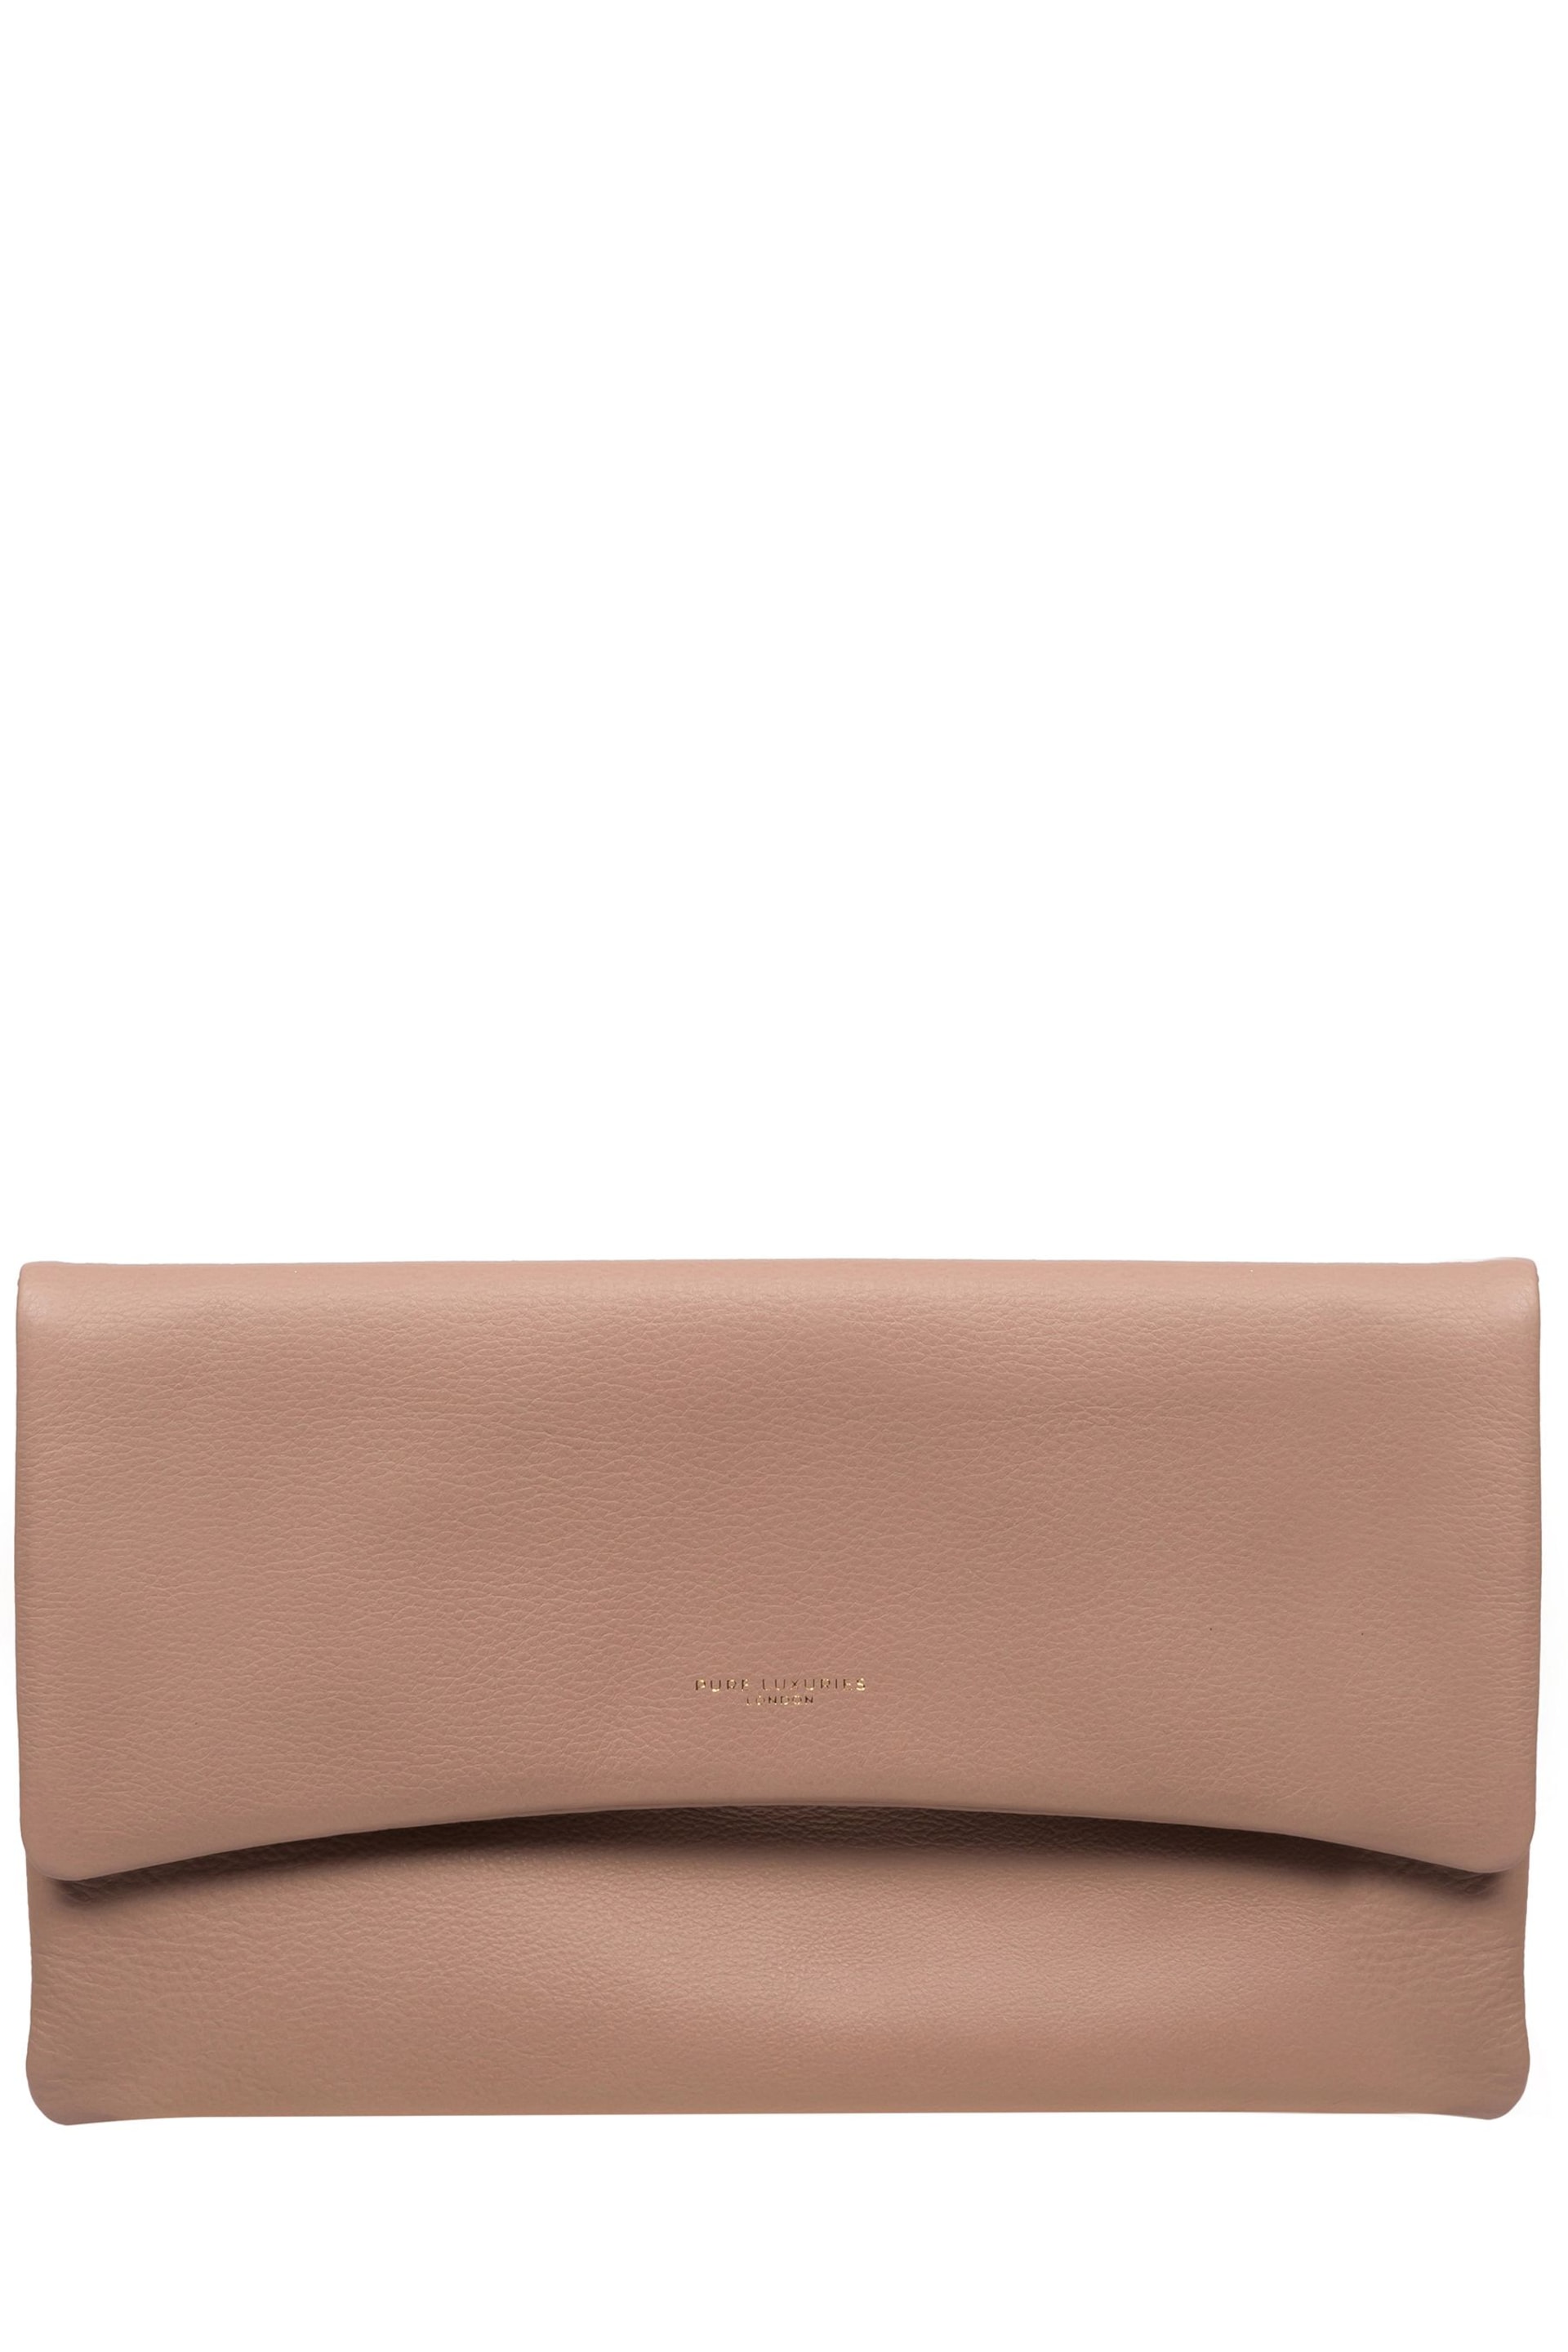 Pure Luxuries London Amelia Nappa Leather Clutch Bag - Image 1 of 5